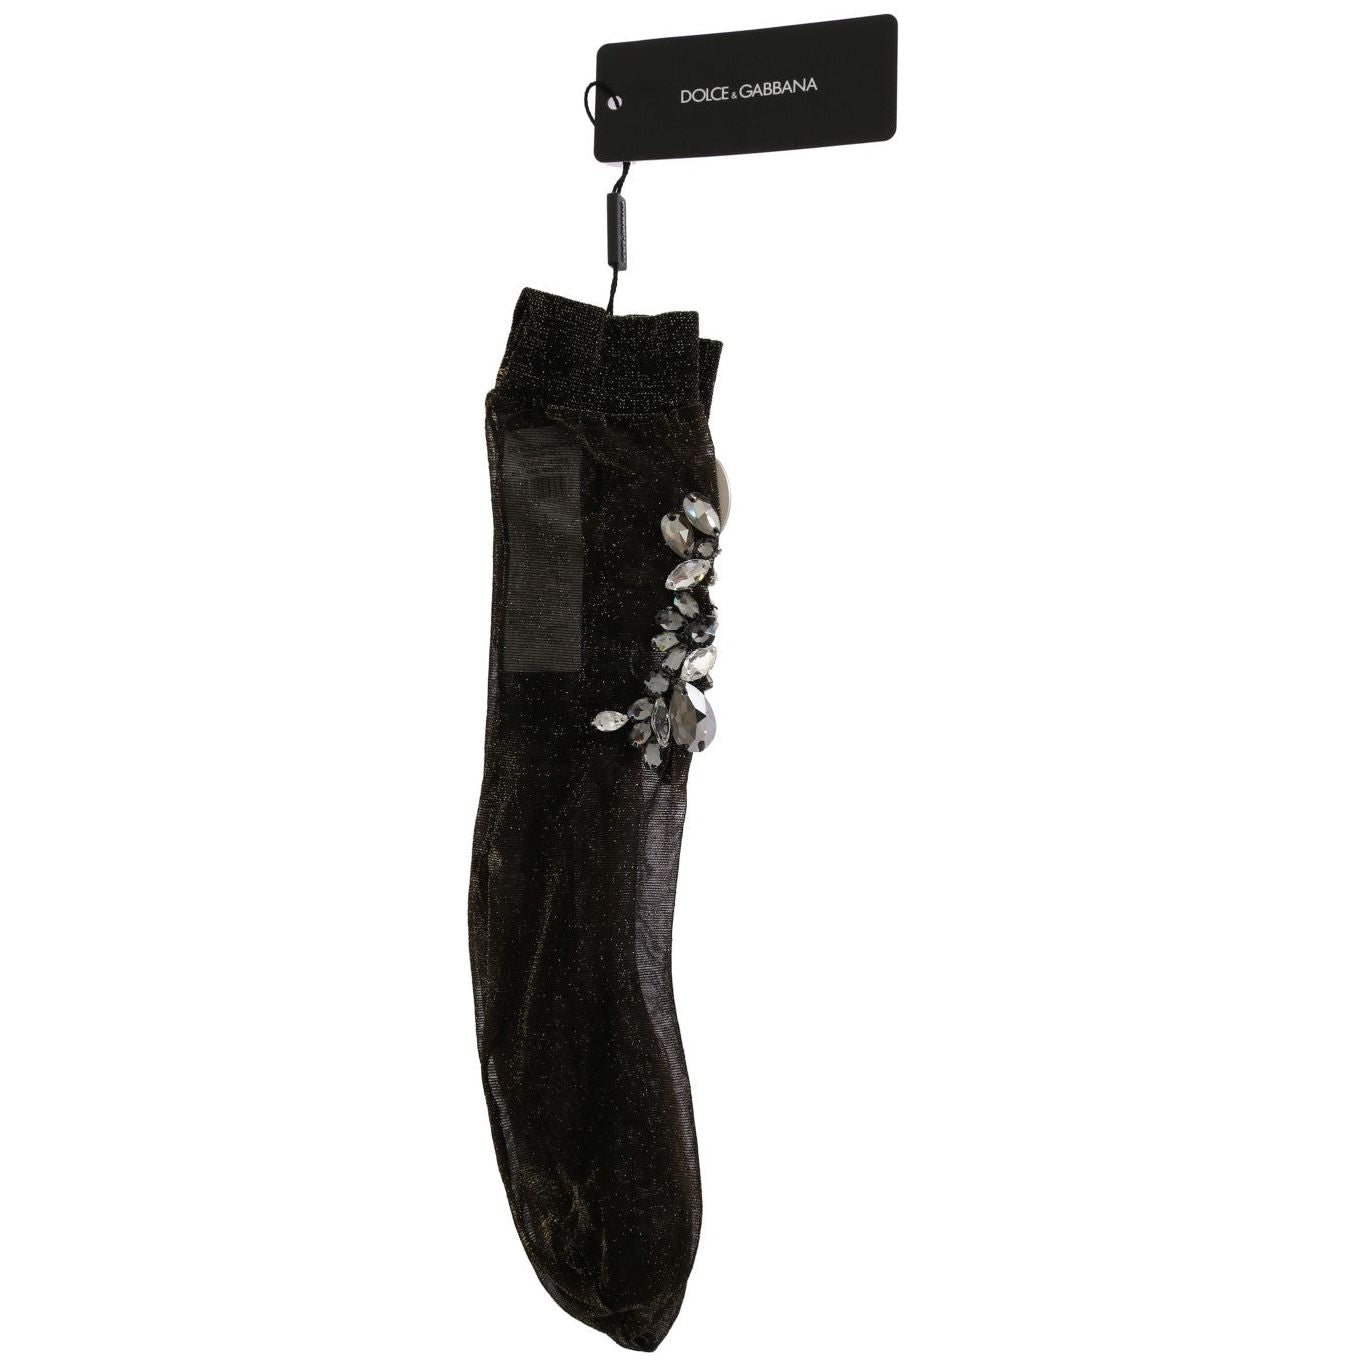 Dolce & Gabbana Crystal-Embellished Black Mid-Calf Stockings black-stretch-floral-clear-crystal-socks